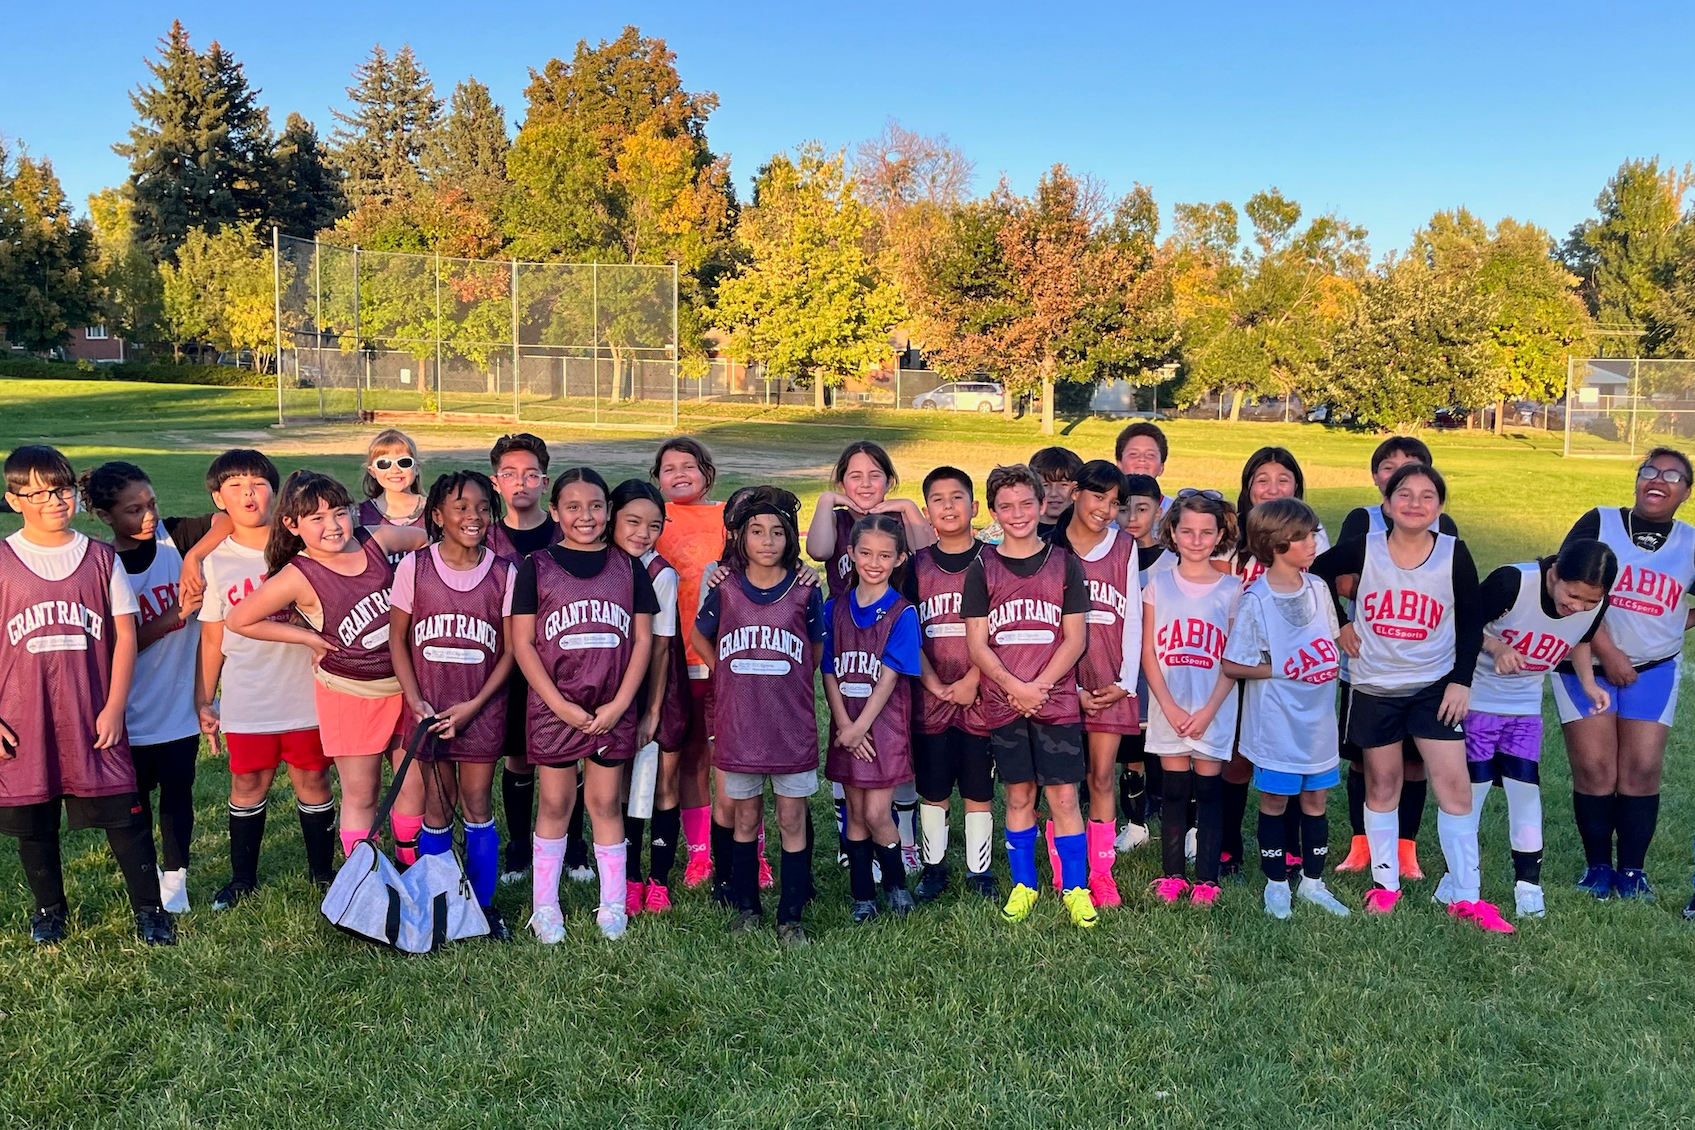 Group photo of Grant Ranch and Sabin's soccer teams.